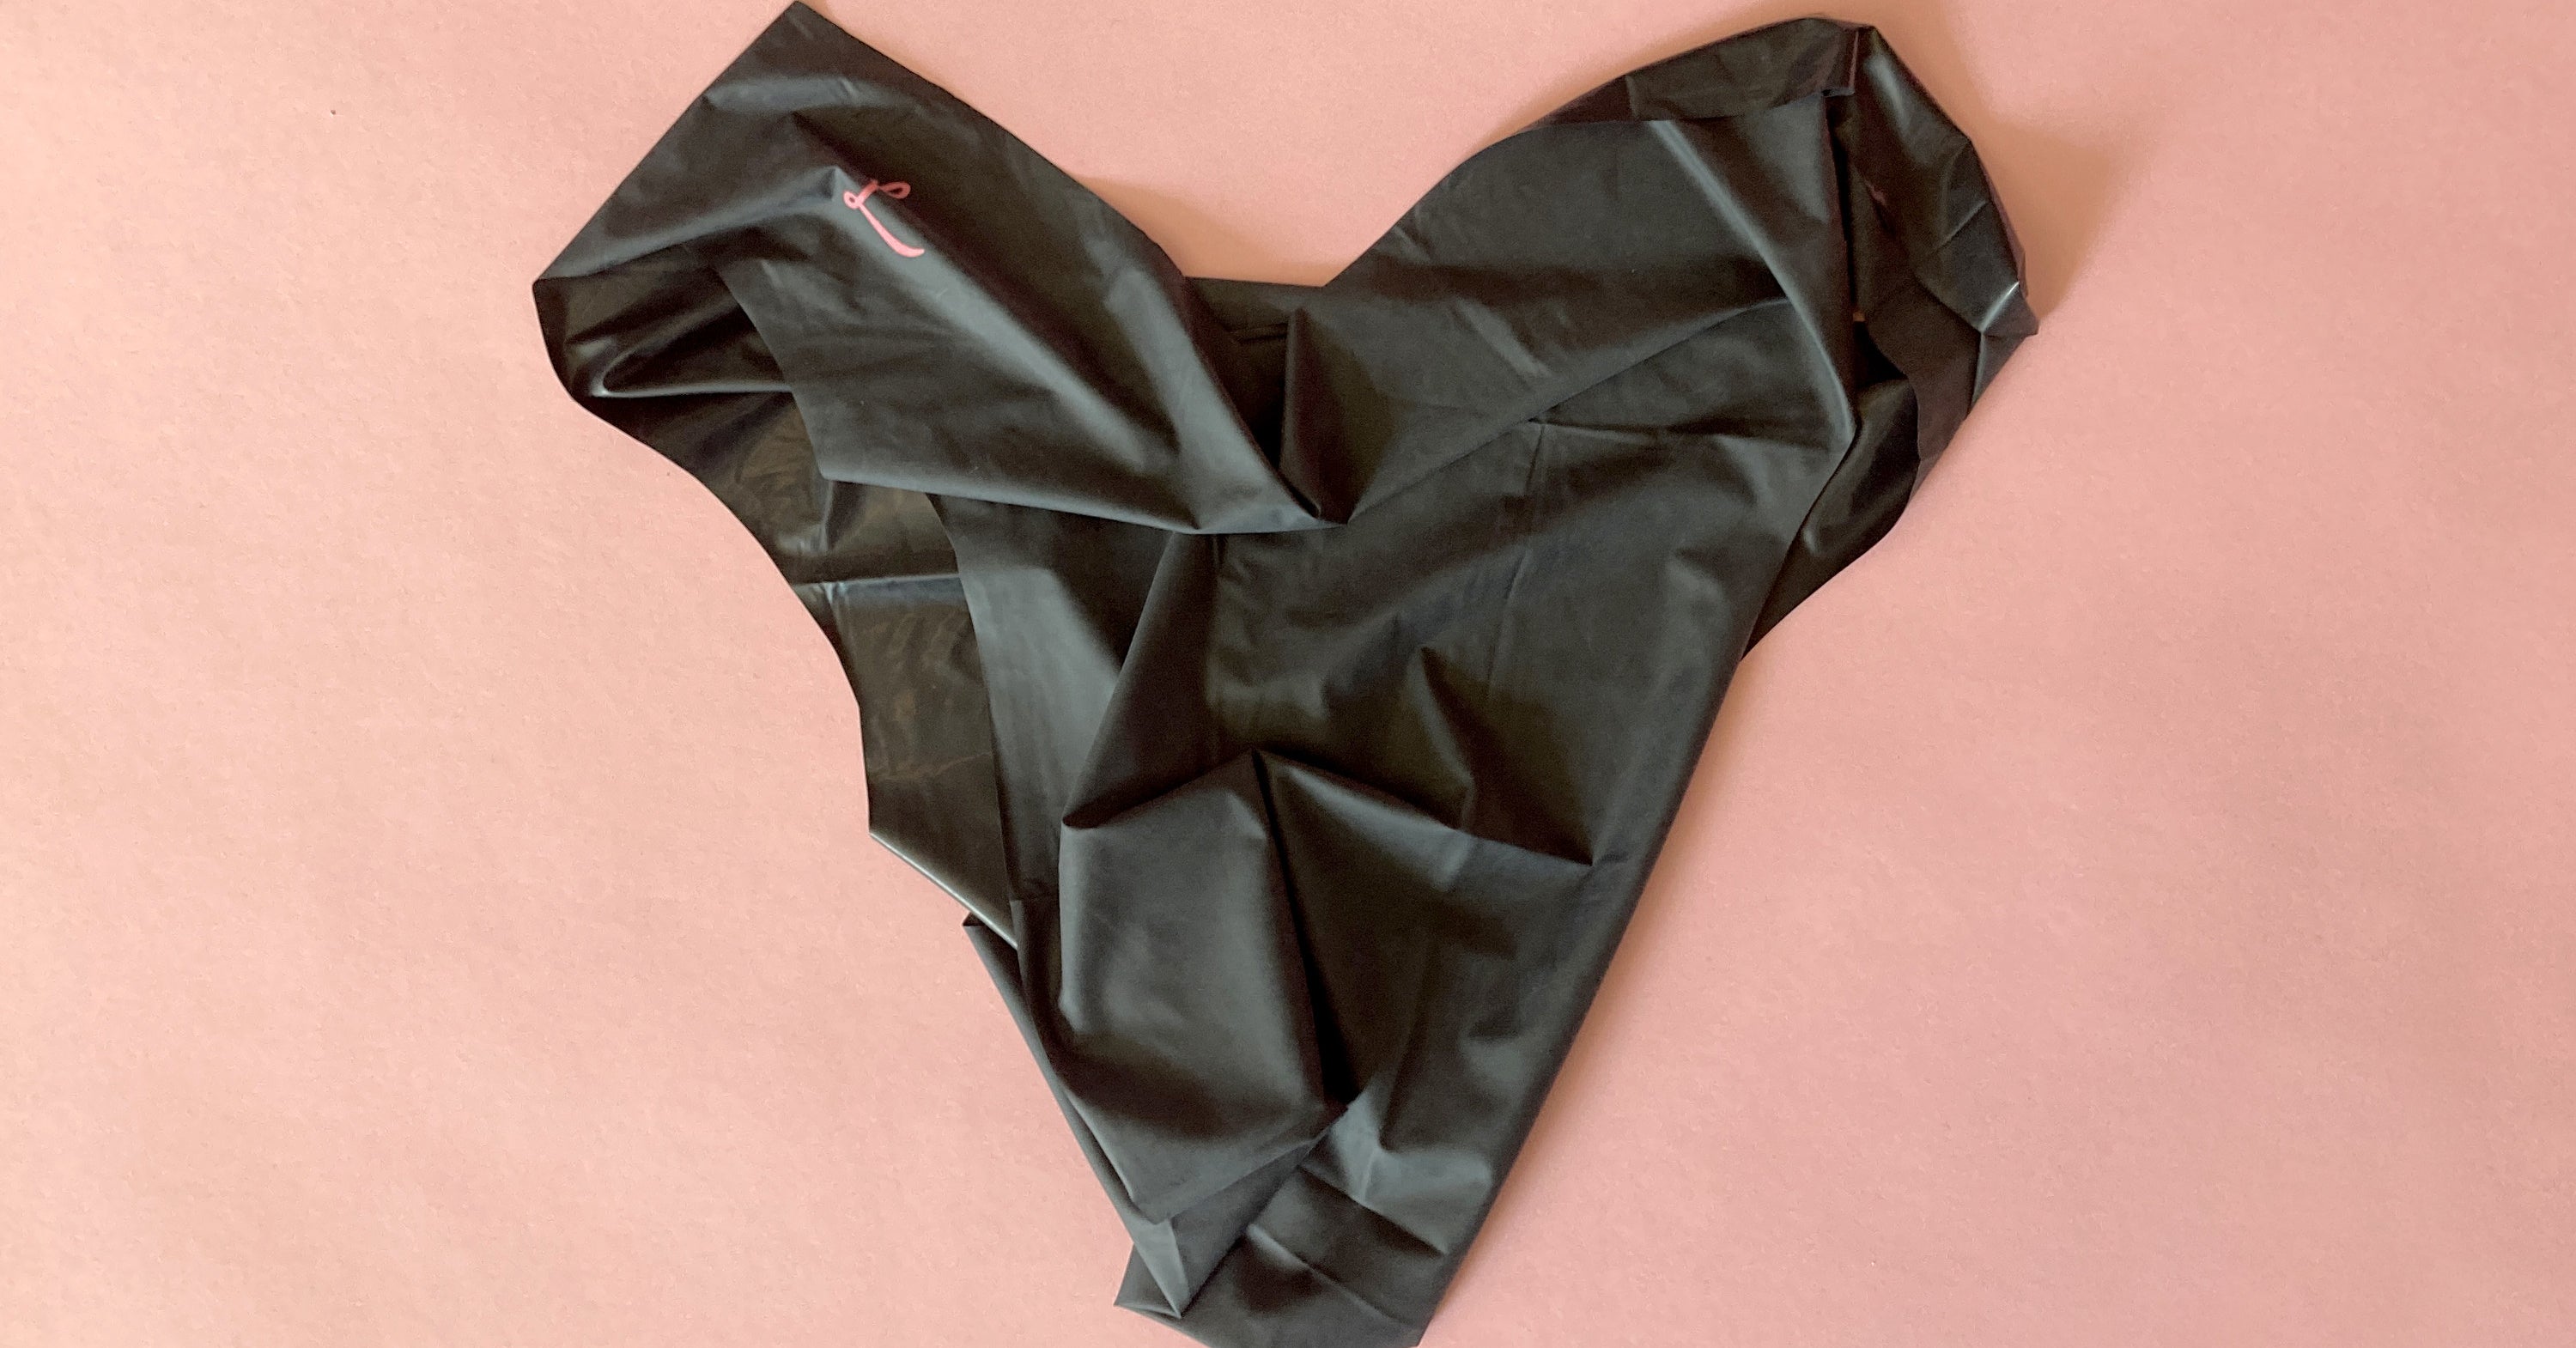 Fda Oks Underwear For Sti Protection During Oral Sex